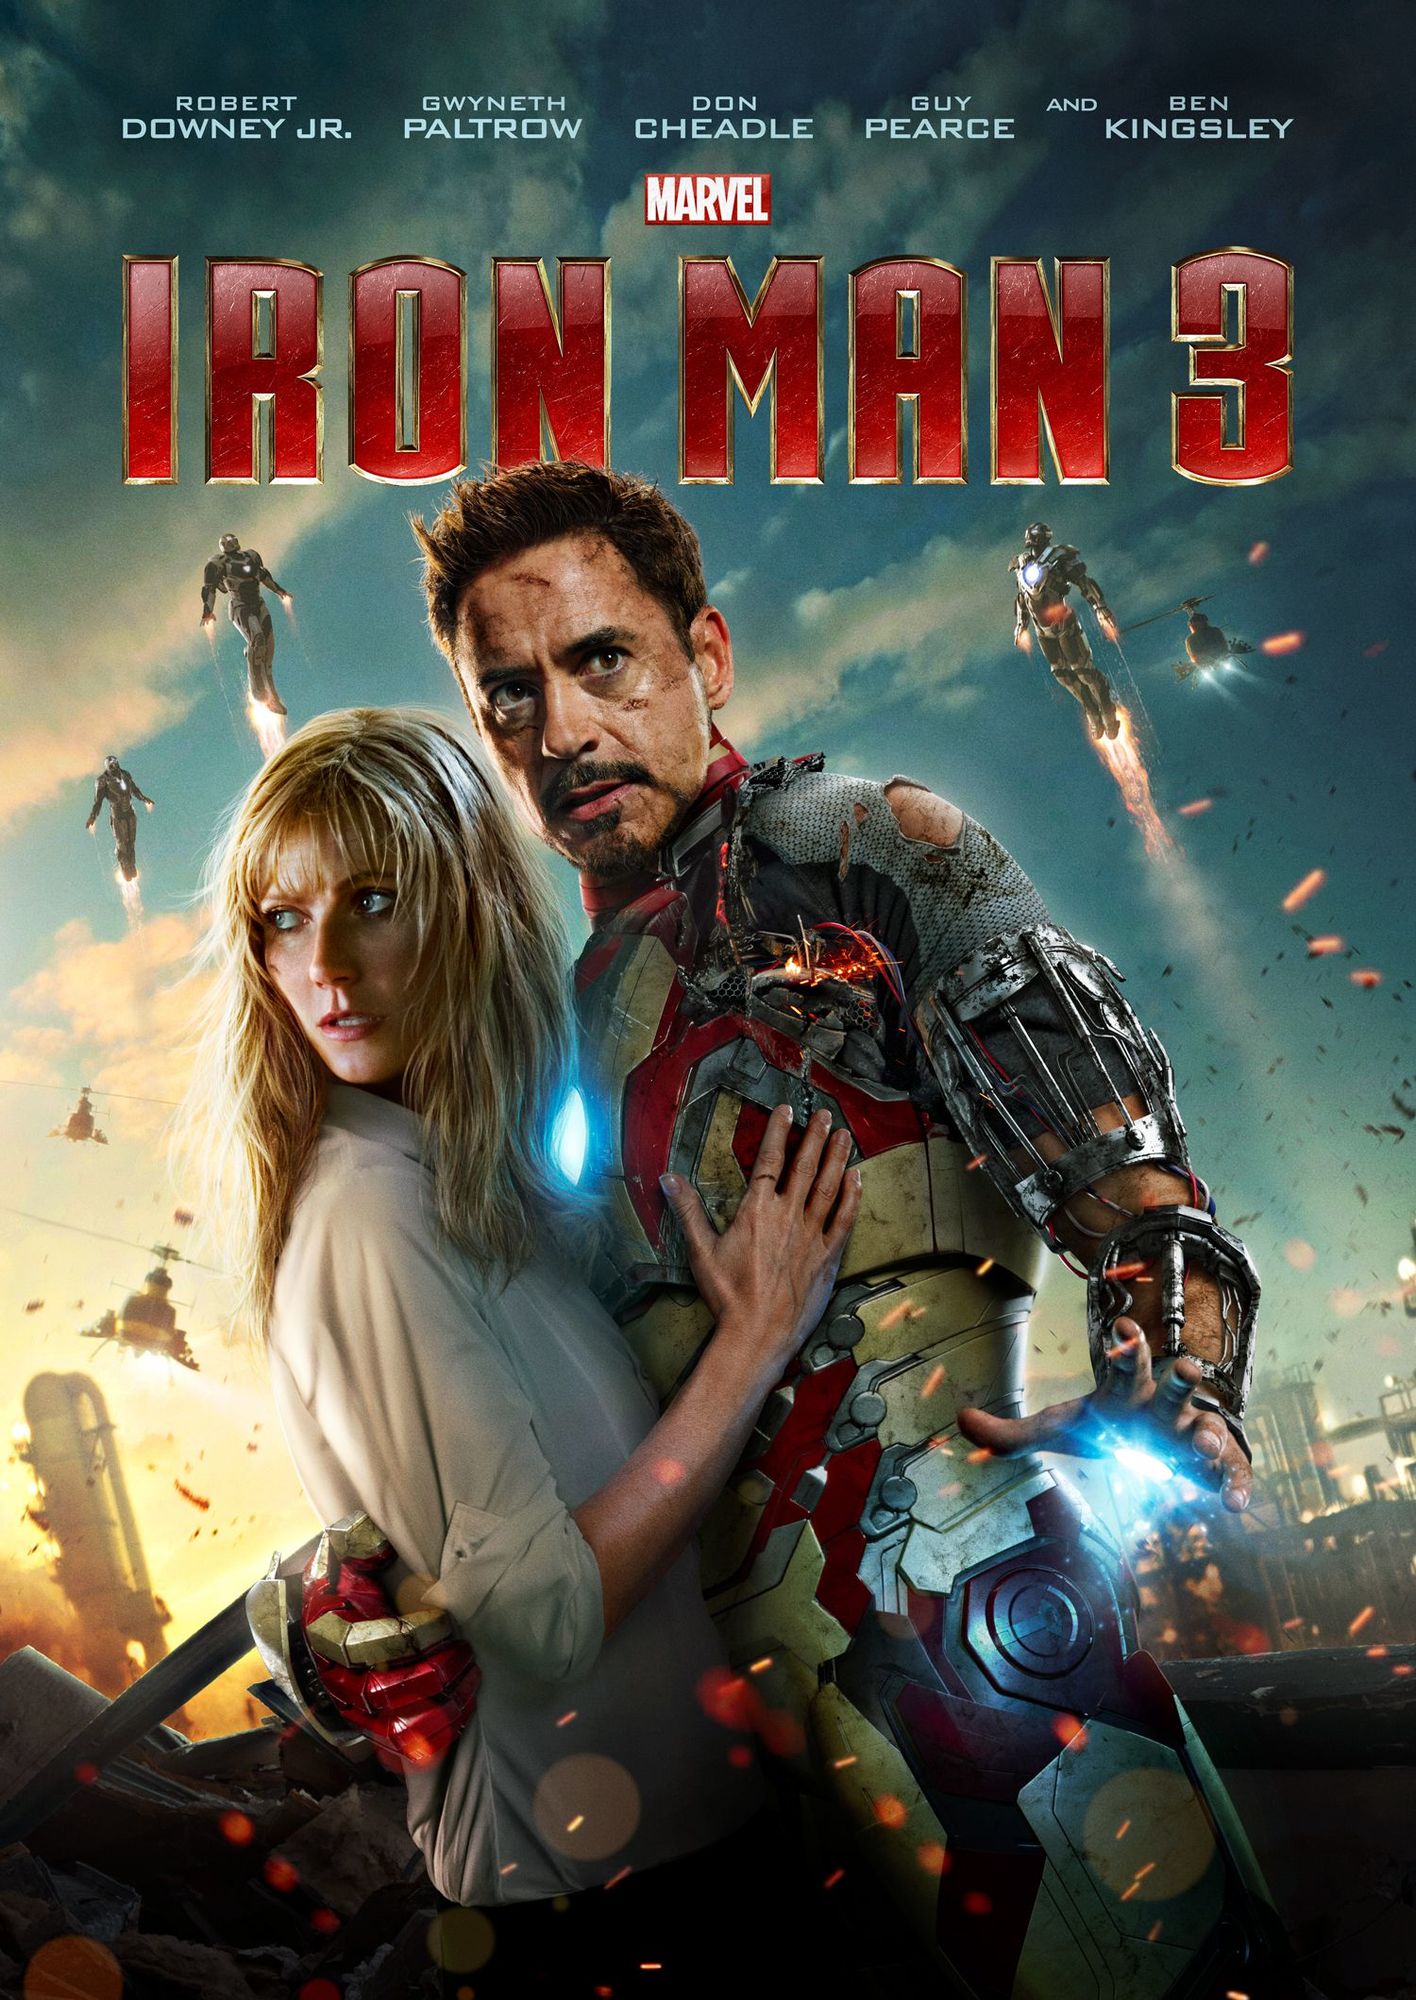 Avengers Endgame Iron Man 3 1 Avengers Endgame : votre programme avant sa sortie Avengers